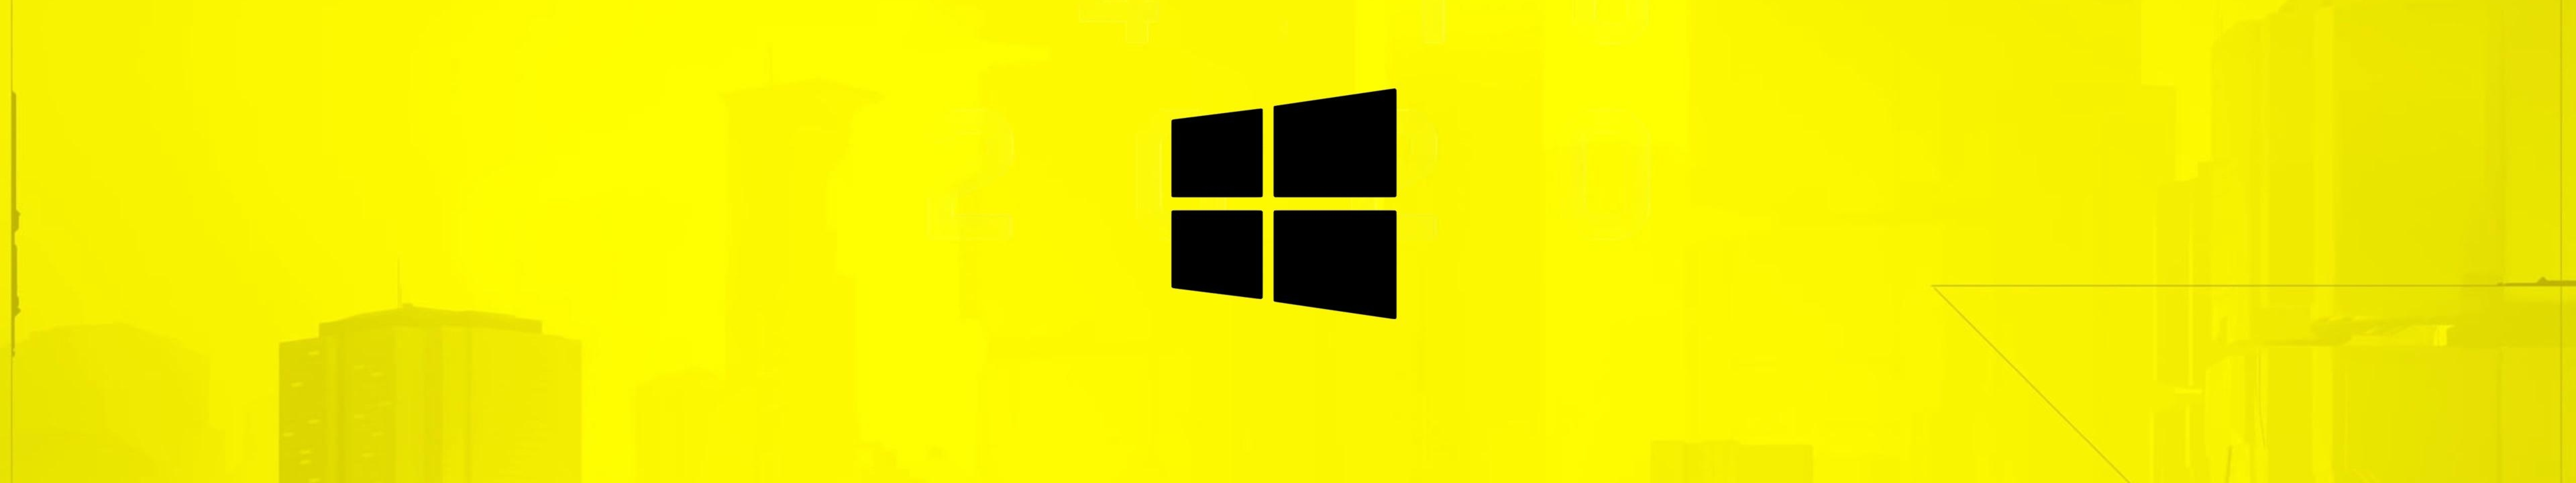 11520x2160 Windows 10 x Cyberpunk 2077 11520x2160 Resolution Wallpaper ...